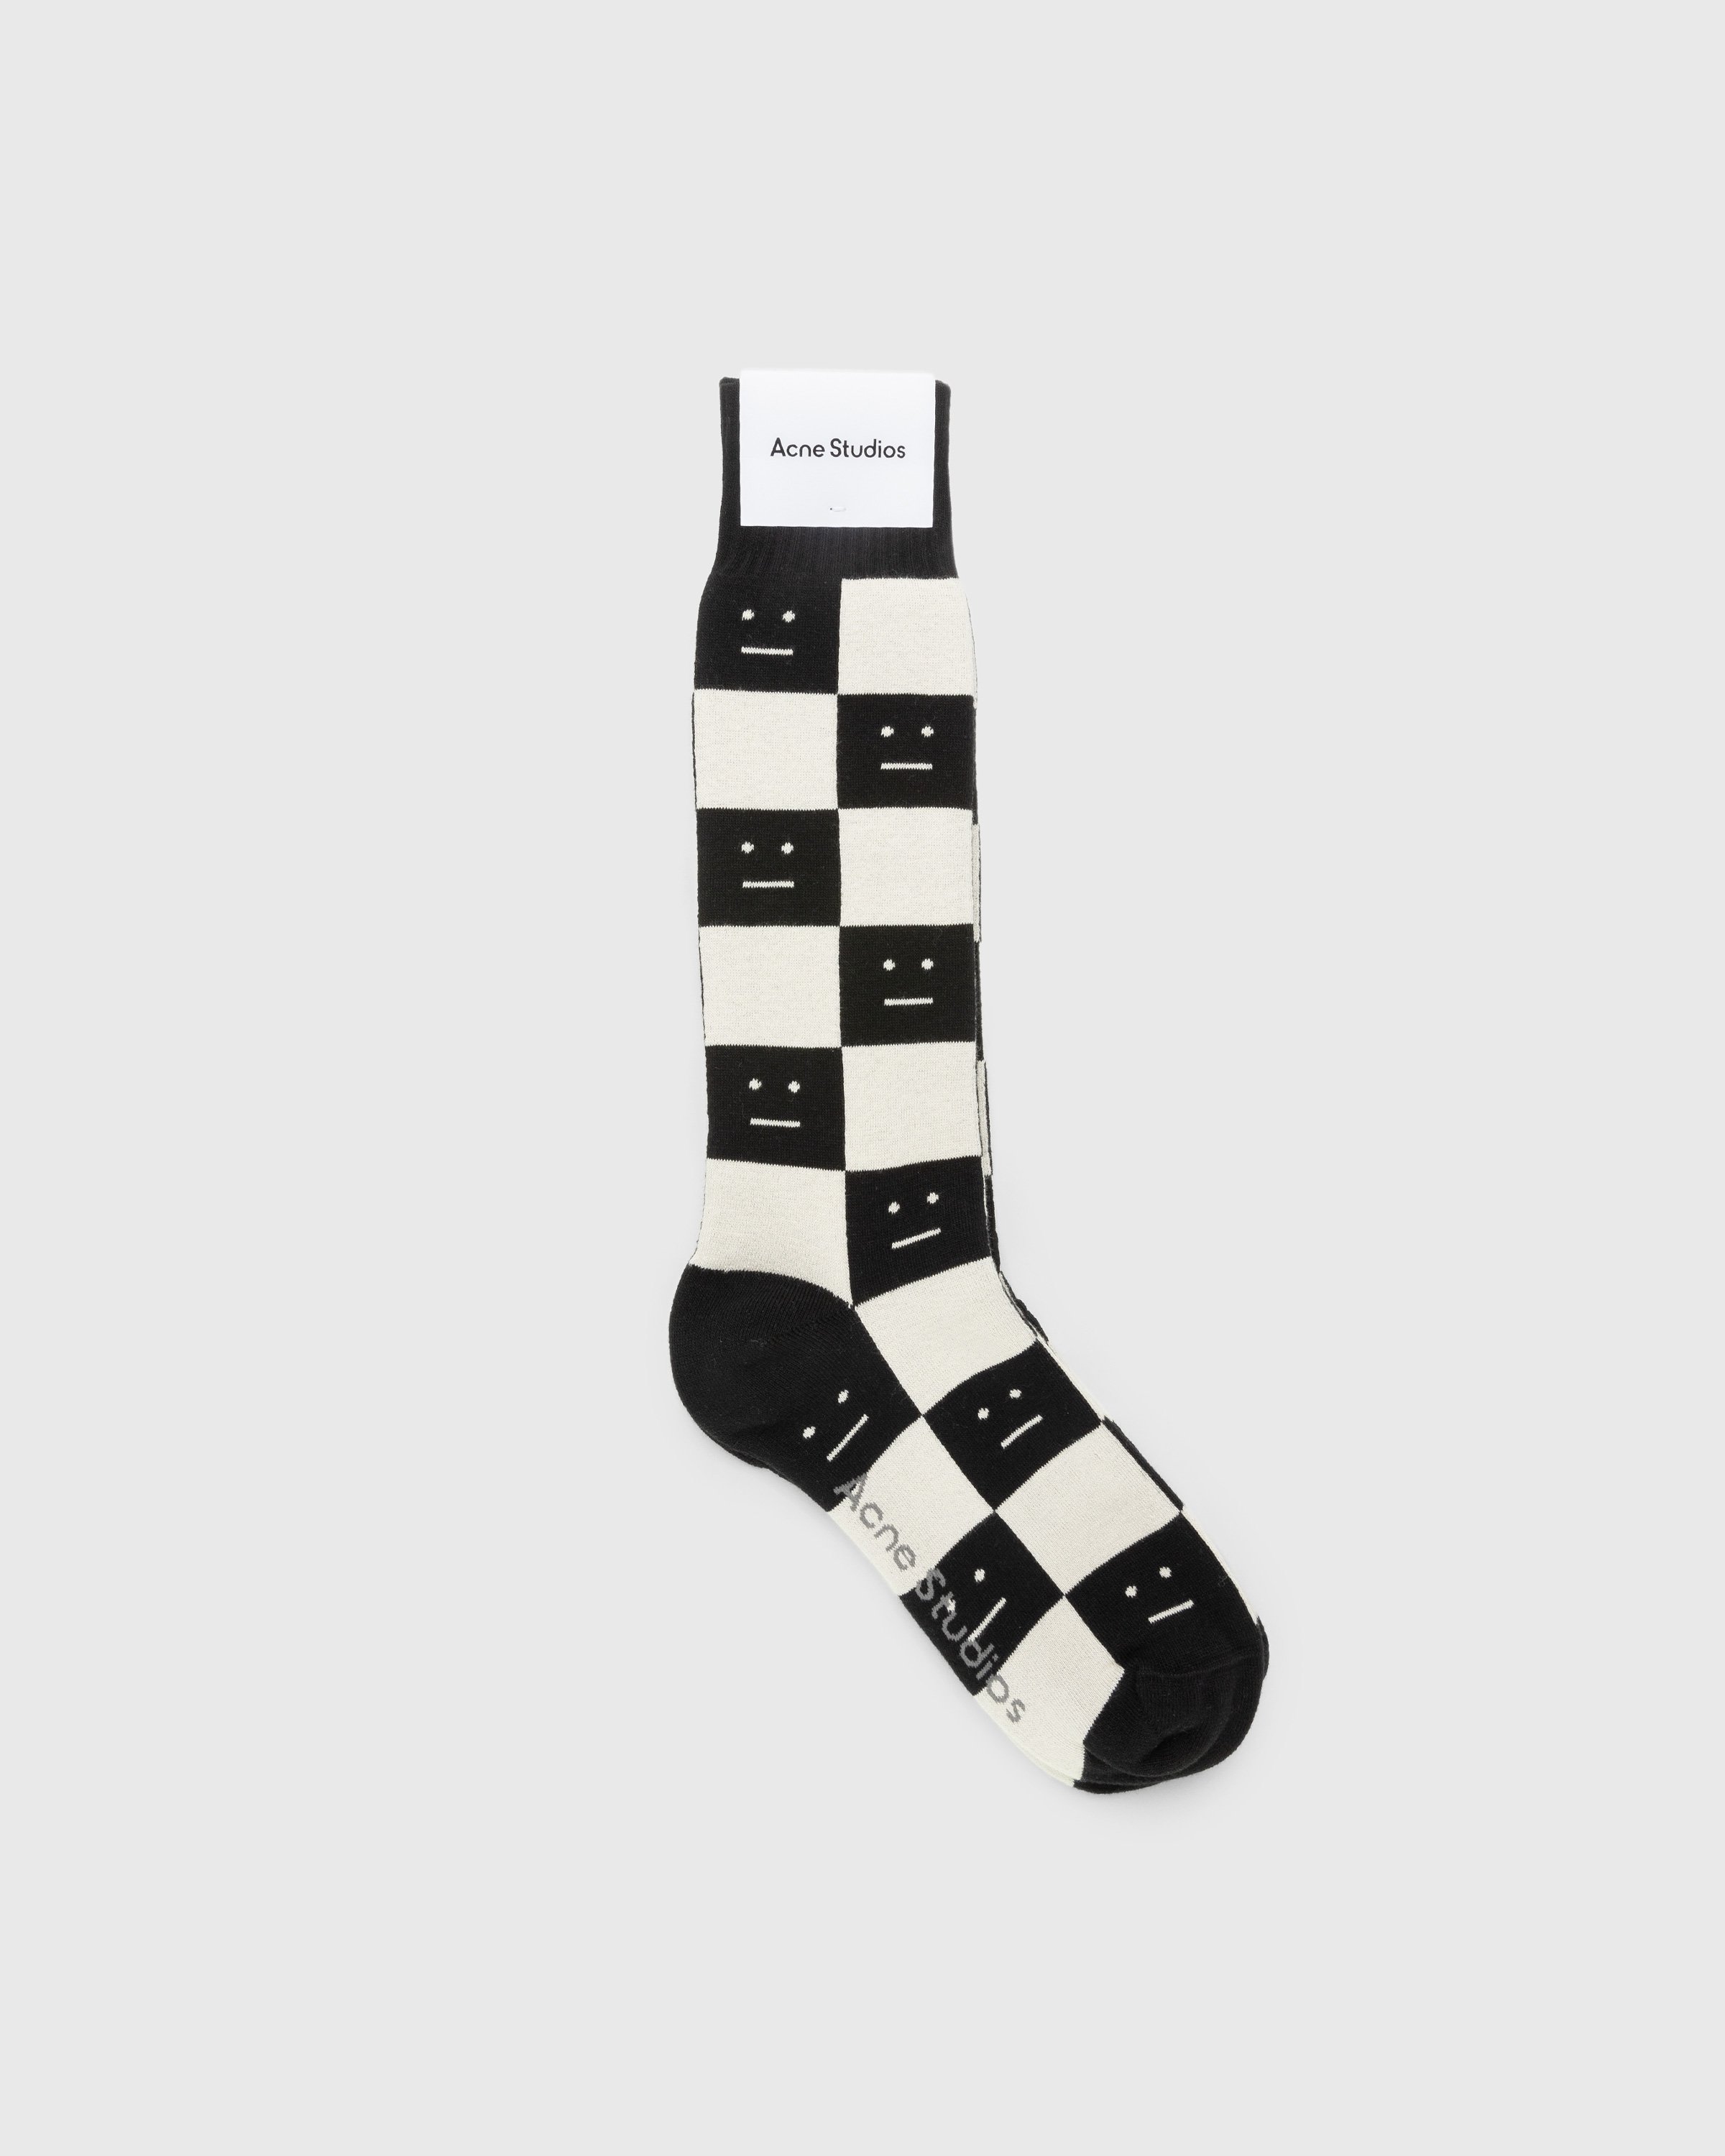 Acne Studios - Checkerboard Socks Black/Oatmeal Beige - Accessories - Black - Image 1